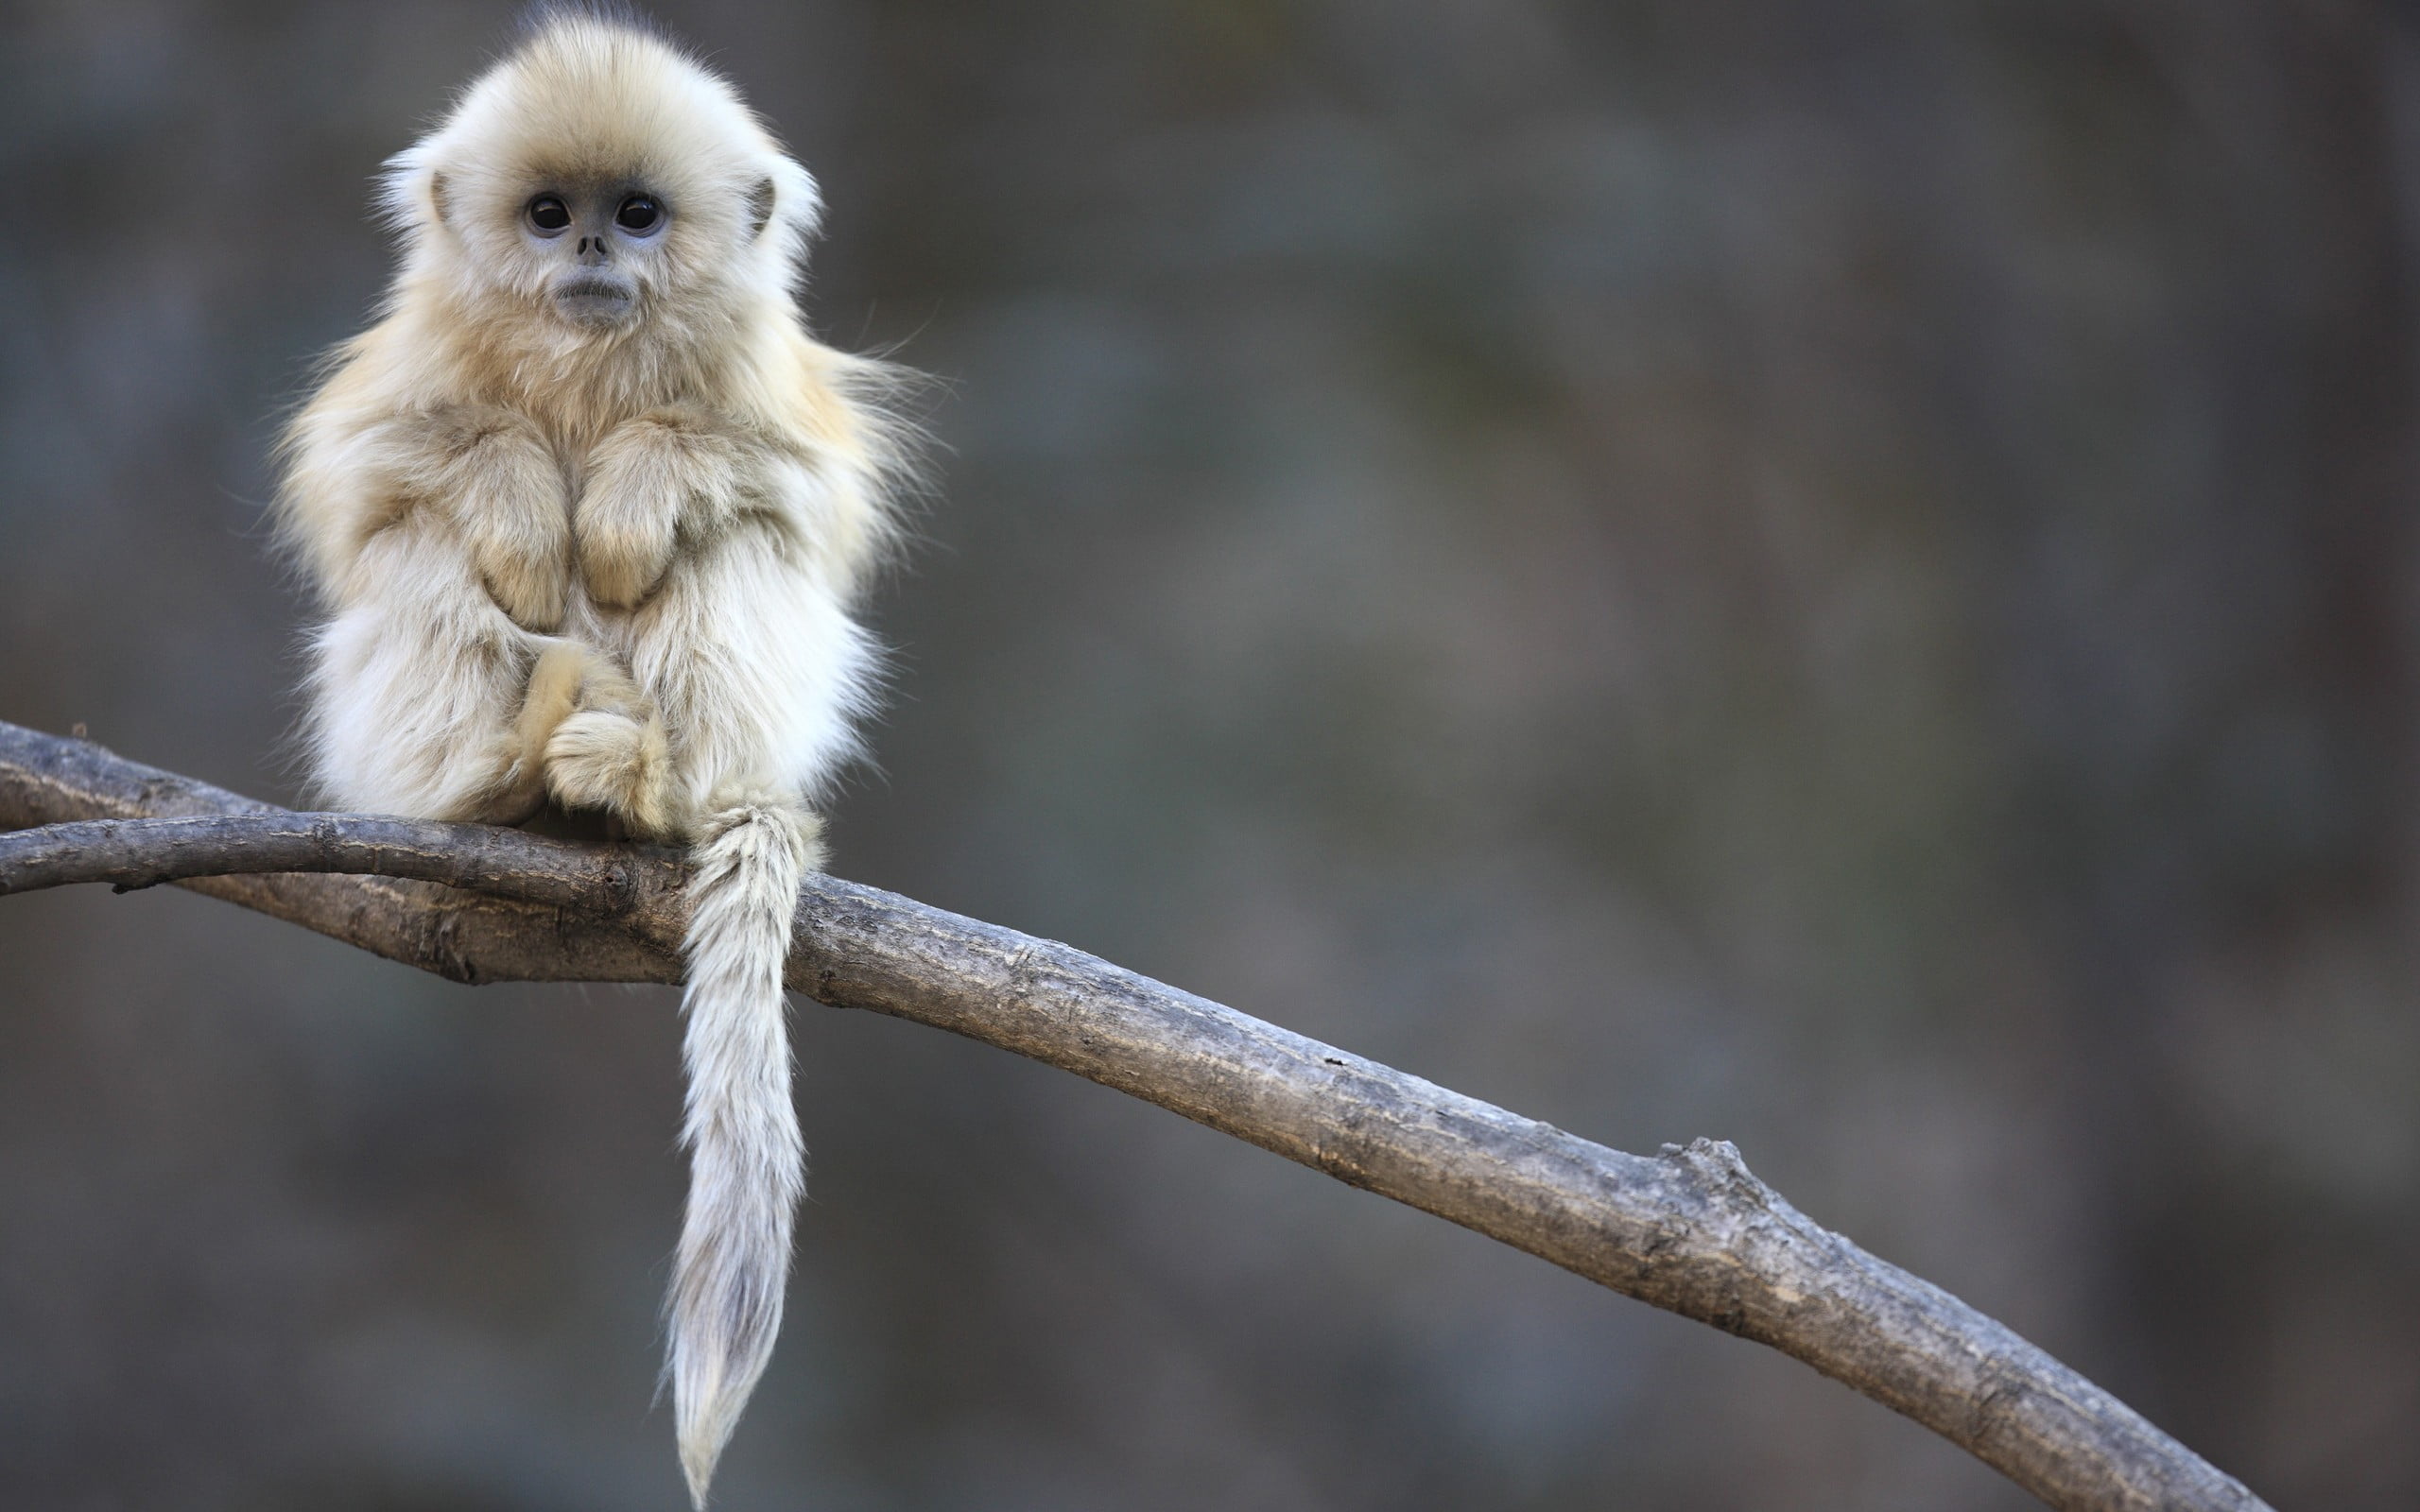 albino primate, animals, monkey, sitting, branch